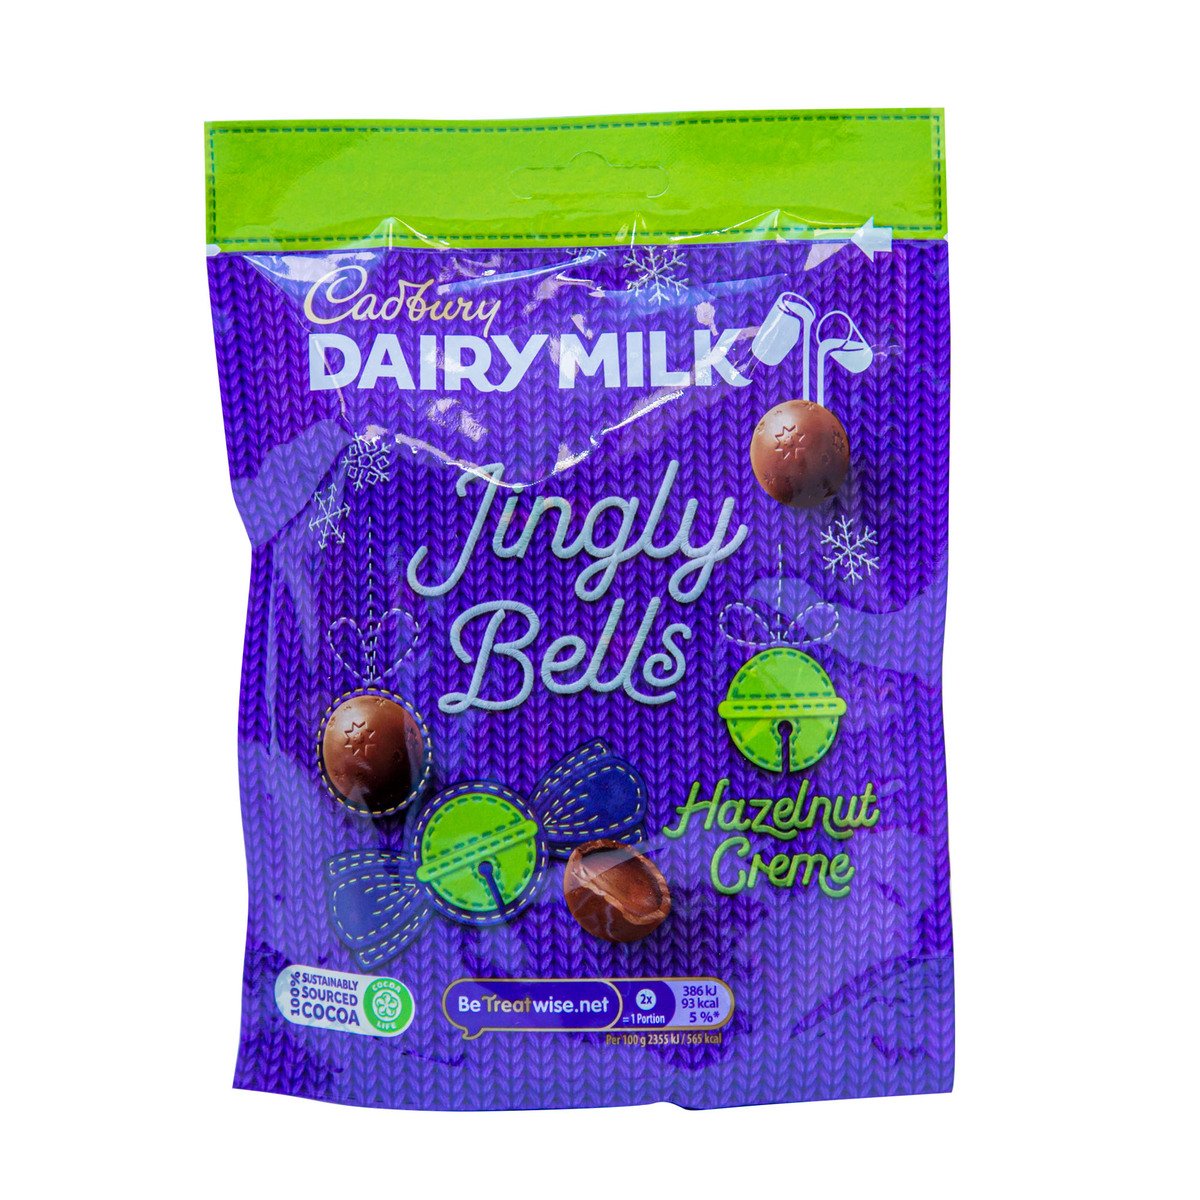 Cadbury Diary Milk Jingly Bells Hazelnut Creme Chocolate 73 g